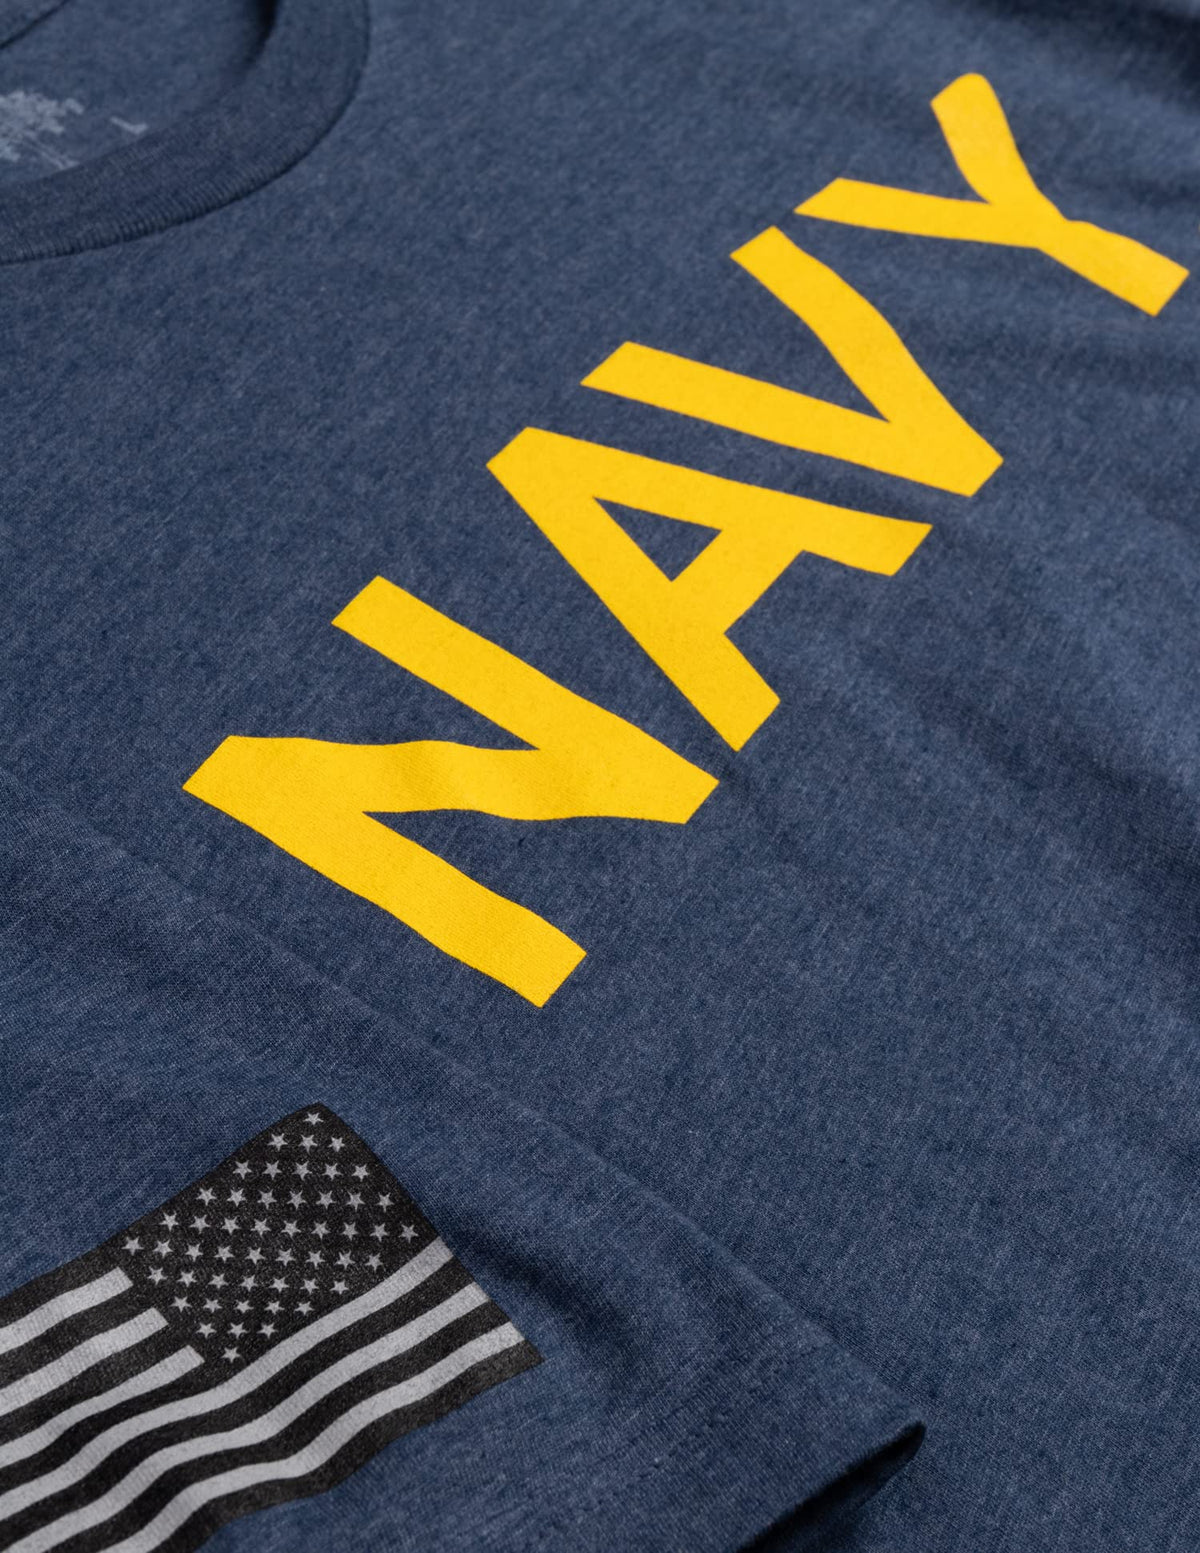 USS Mississippi, SSN-782 | U.S. Navy Sailor Veteran USN United States Naval T-shirt for Men Women